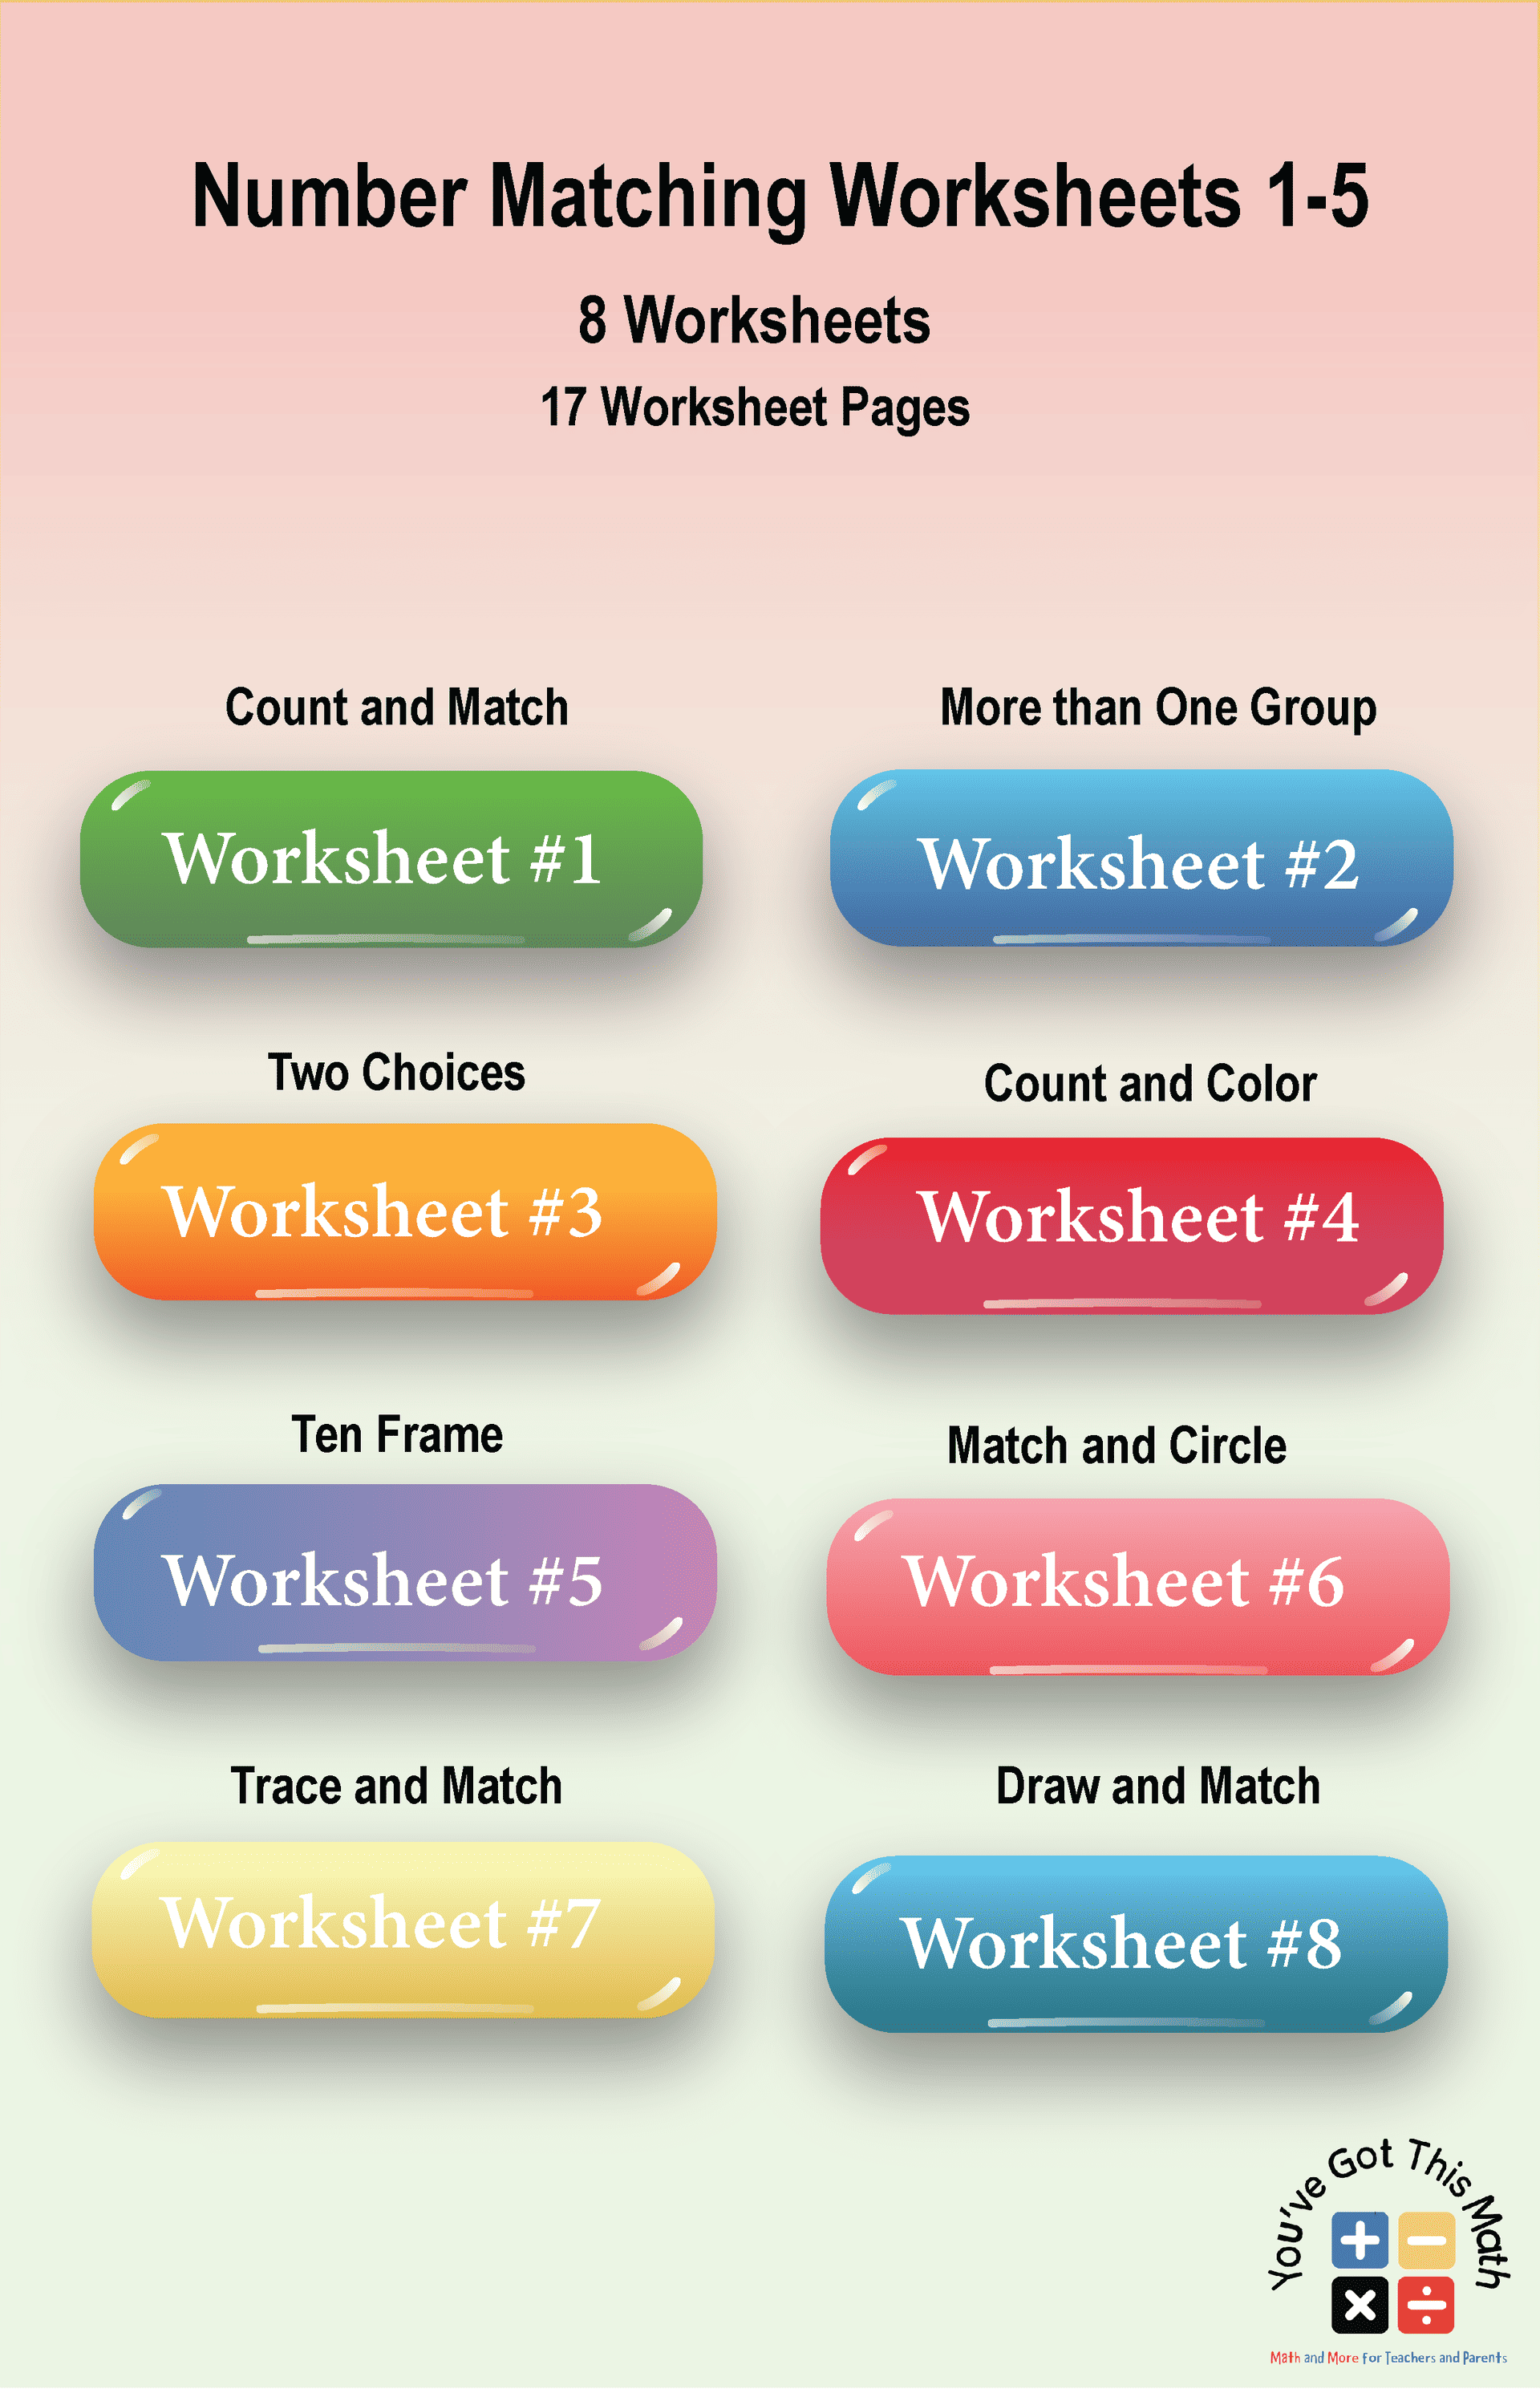 Number Matching Worksheets 1-5 box image-01